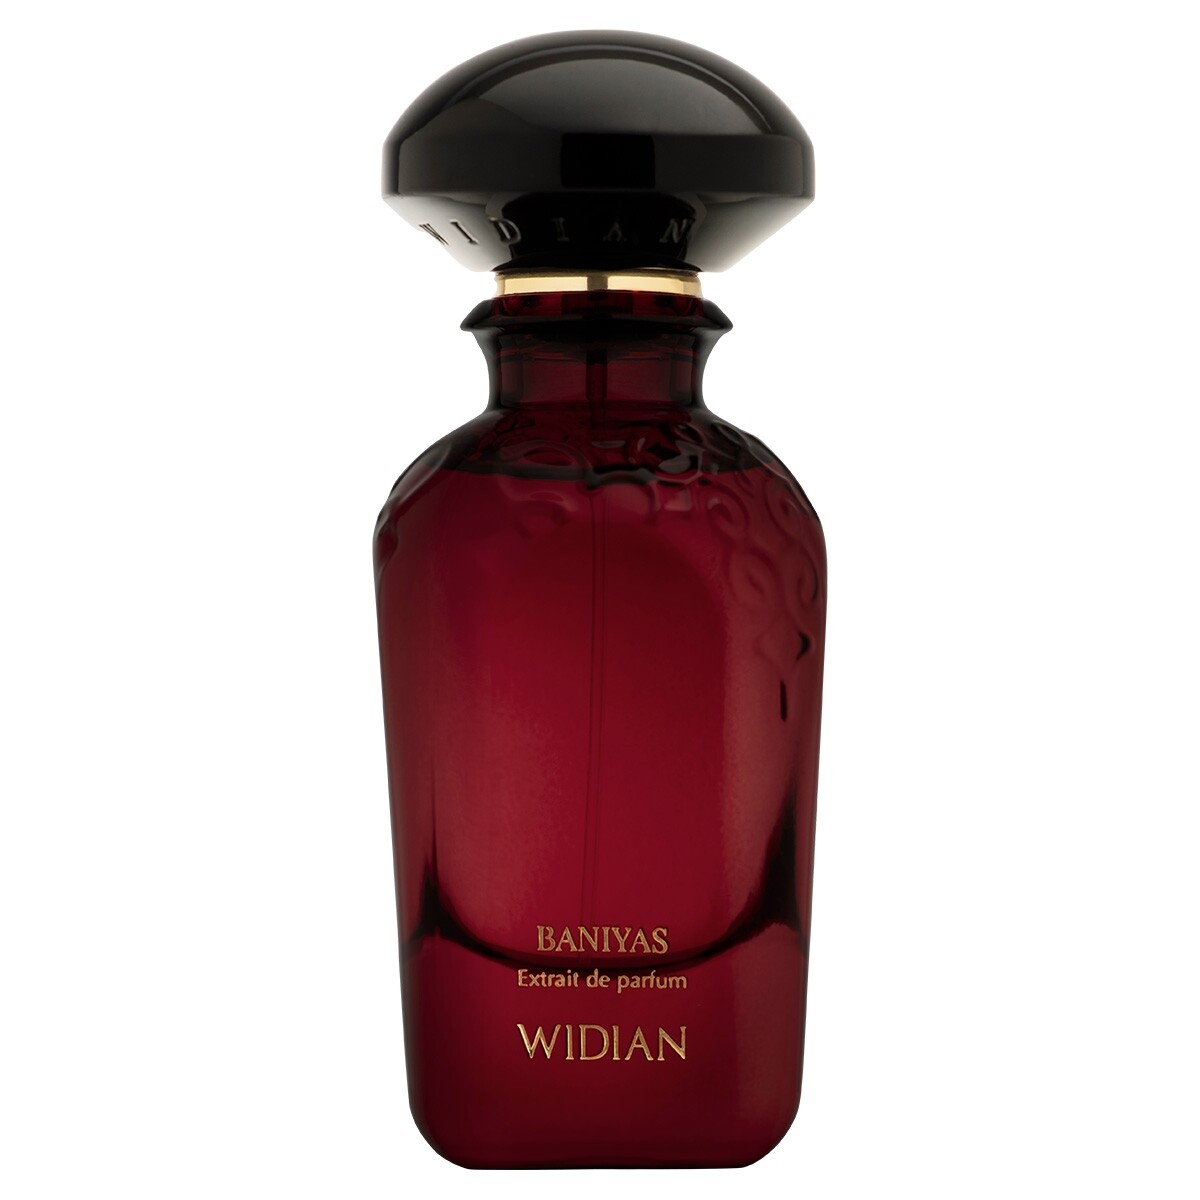 WIDIAN Baniyas Parfum